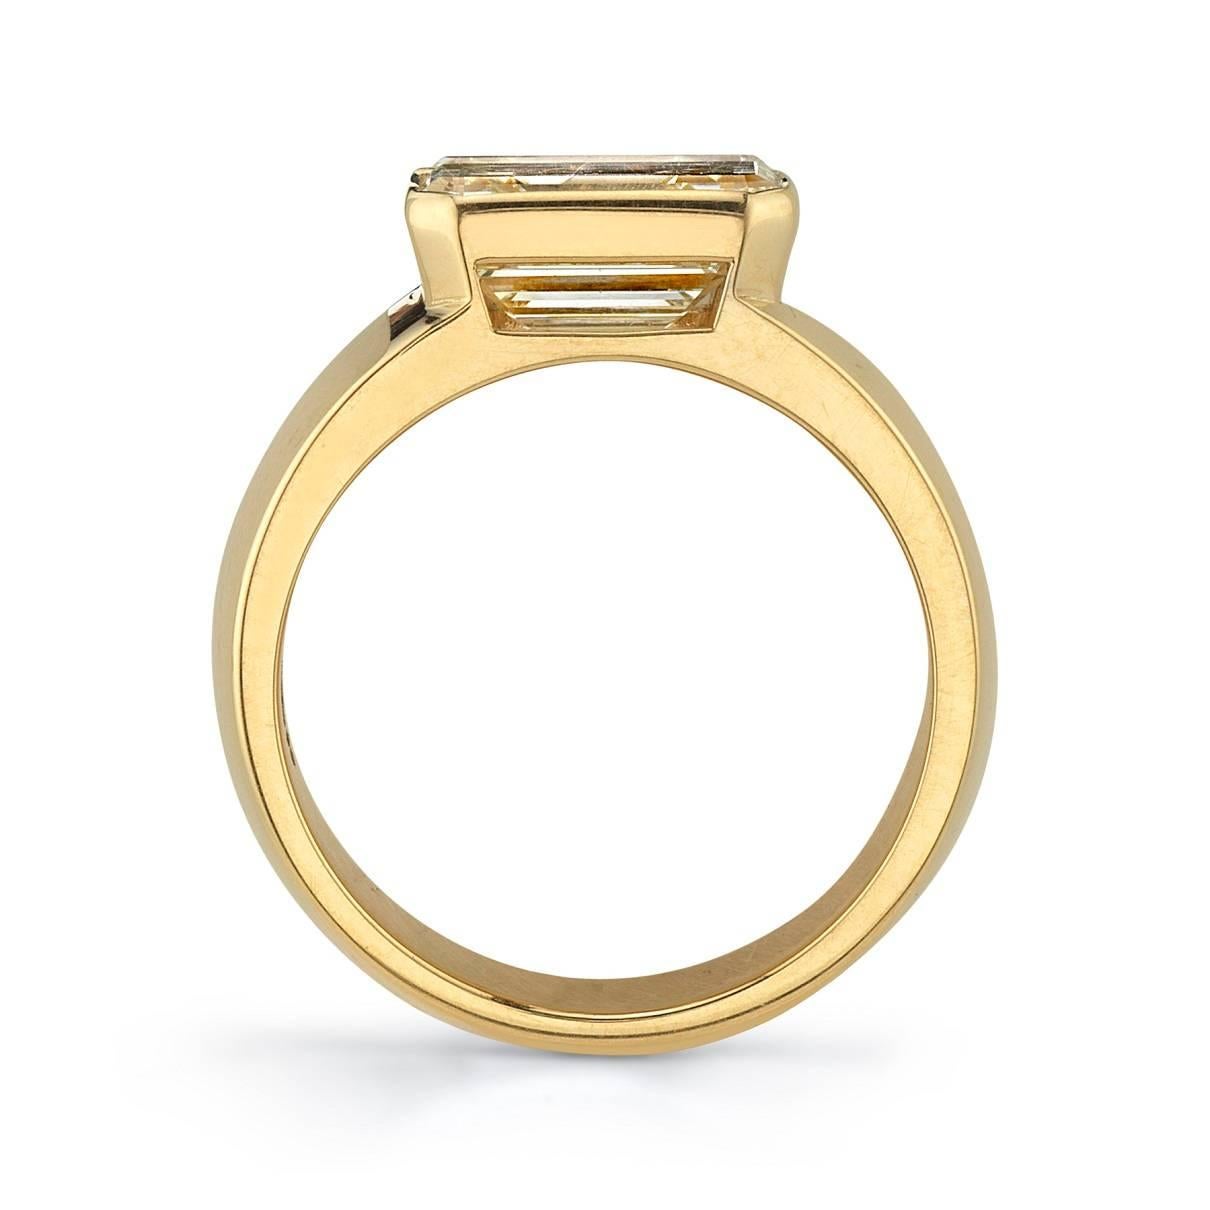 Contemporary 3.39 Carat Emerald Cut Diamond Ring